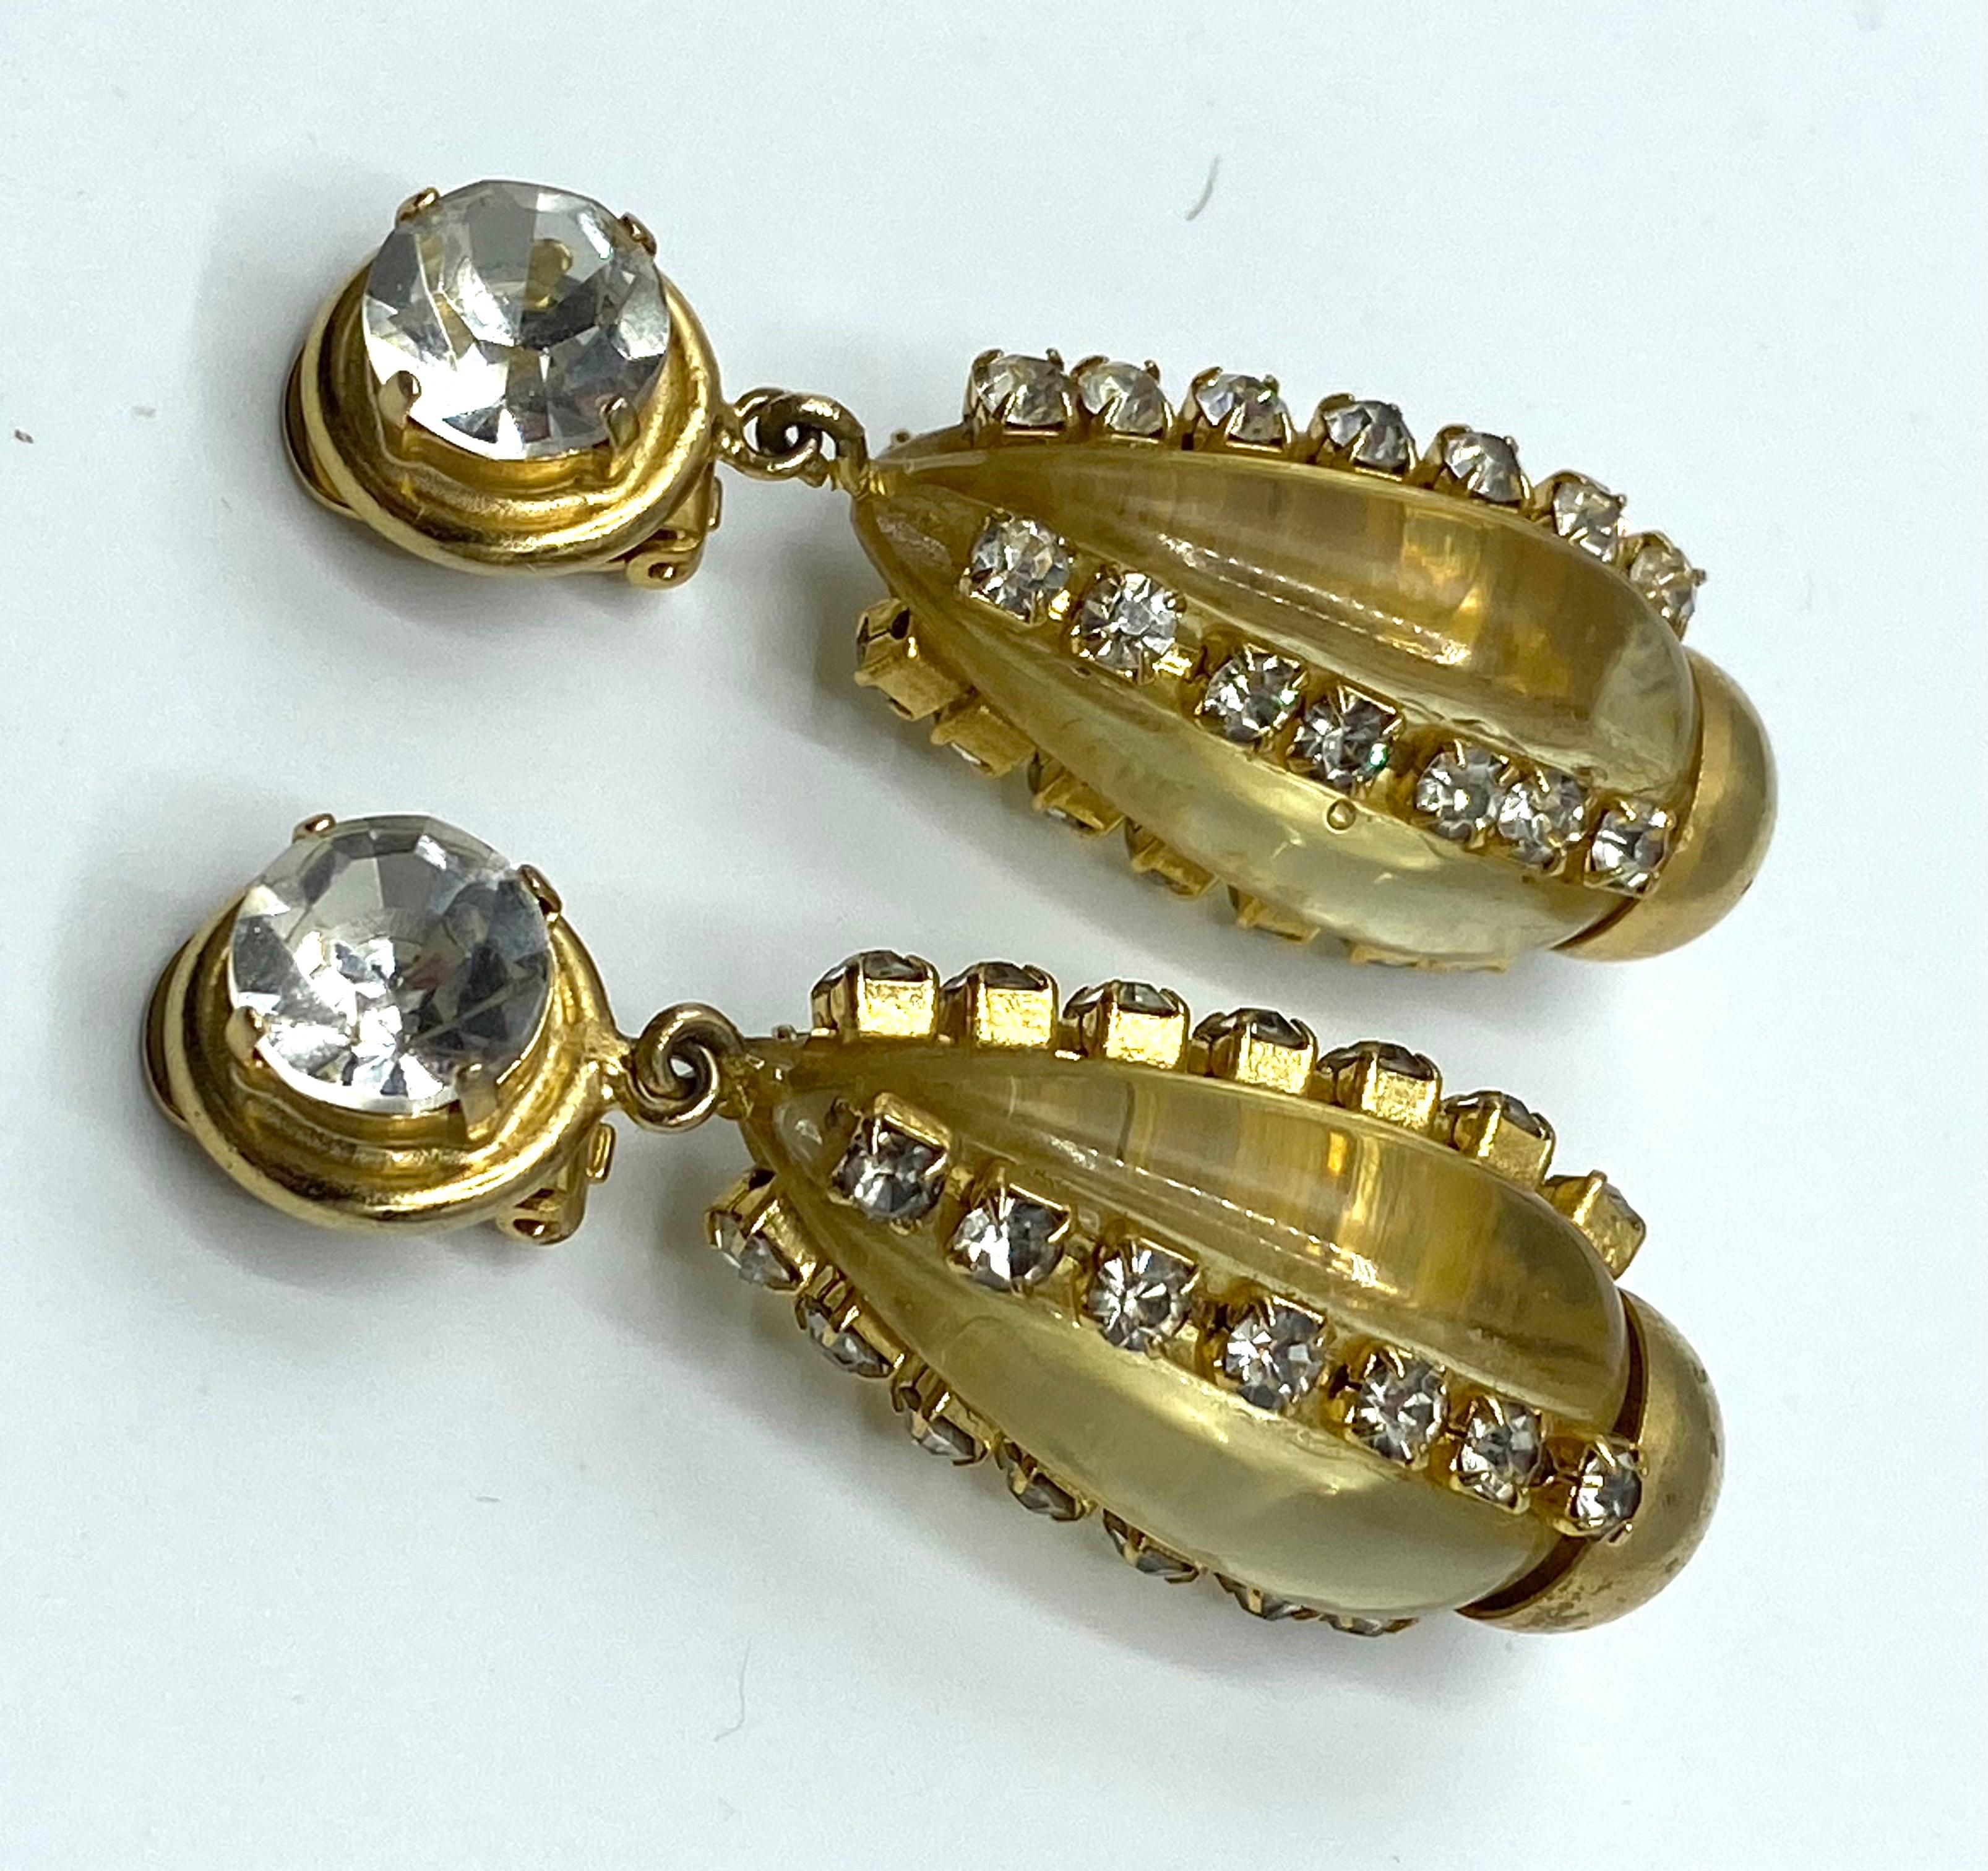 Sharra Pagano, Italy 1980s Gold, Rhinestone & Lucite Pendant Earrings 8